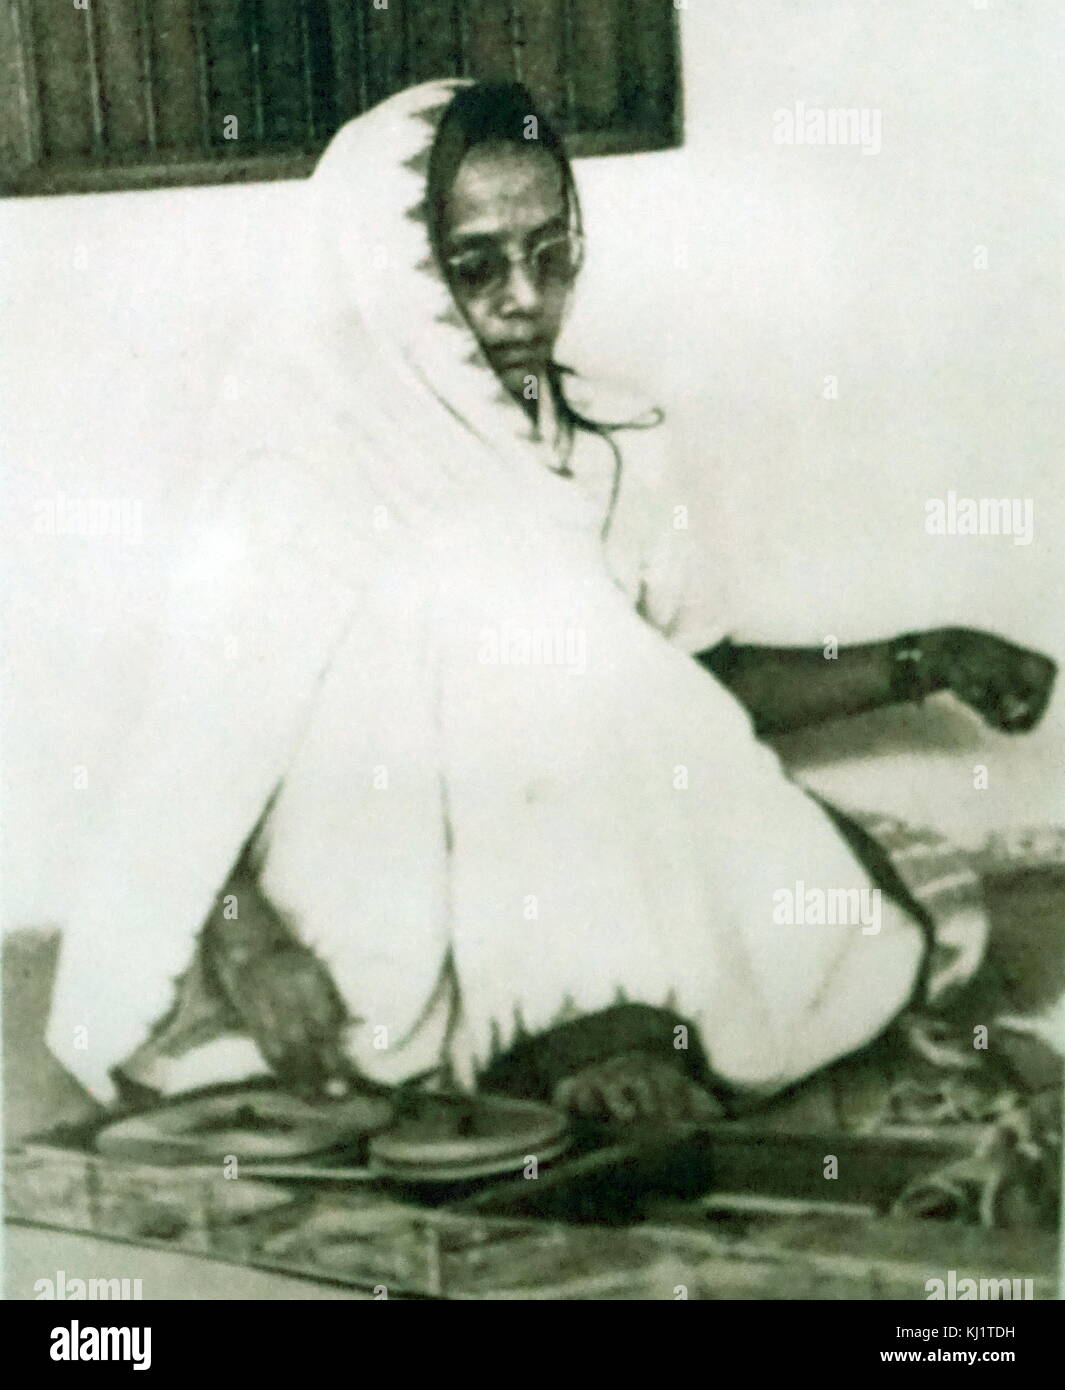 Prabhavati Devi (1906 - 15 de abril de 1973) estaba en la vanguardia de la lucha por la libertad en Bihar. Se casó con Jayprakash Narayan, en octubre de 1920 Foto de stock